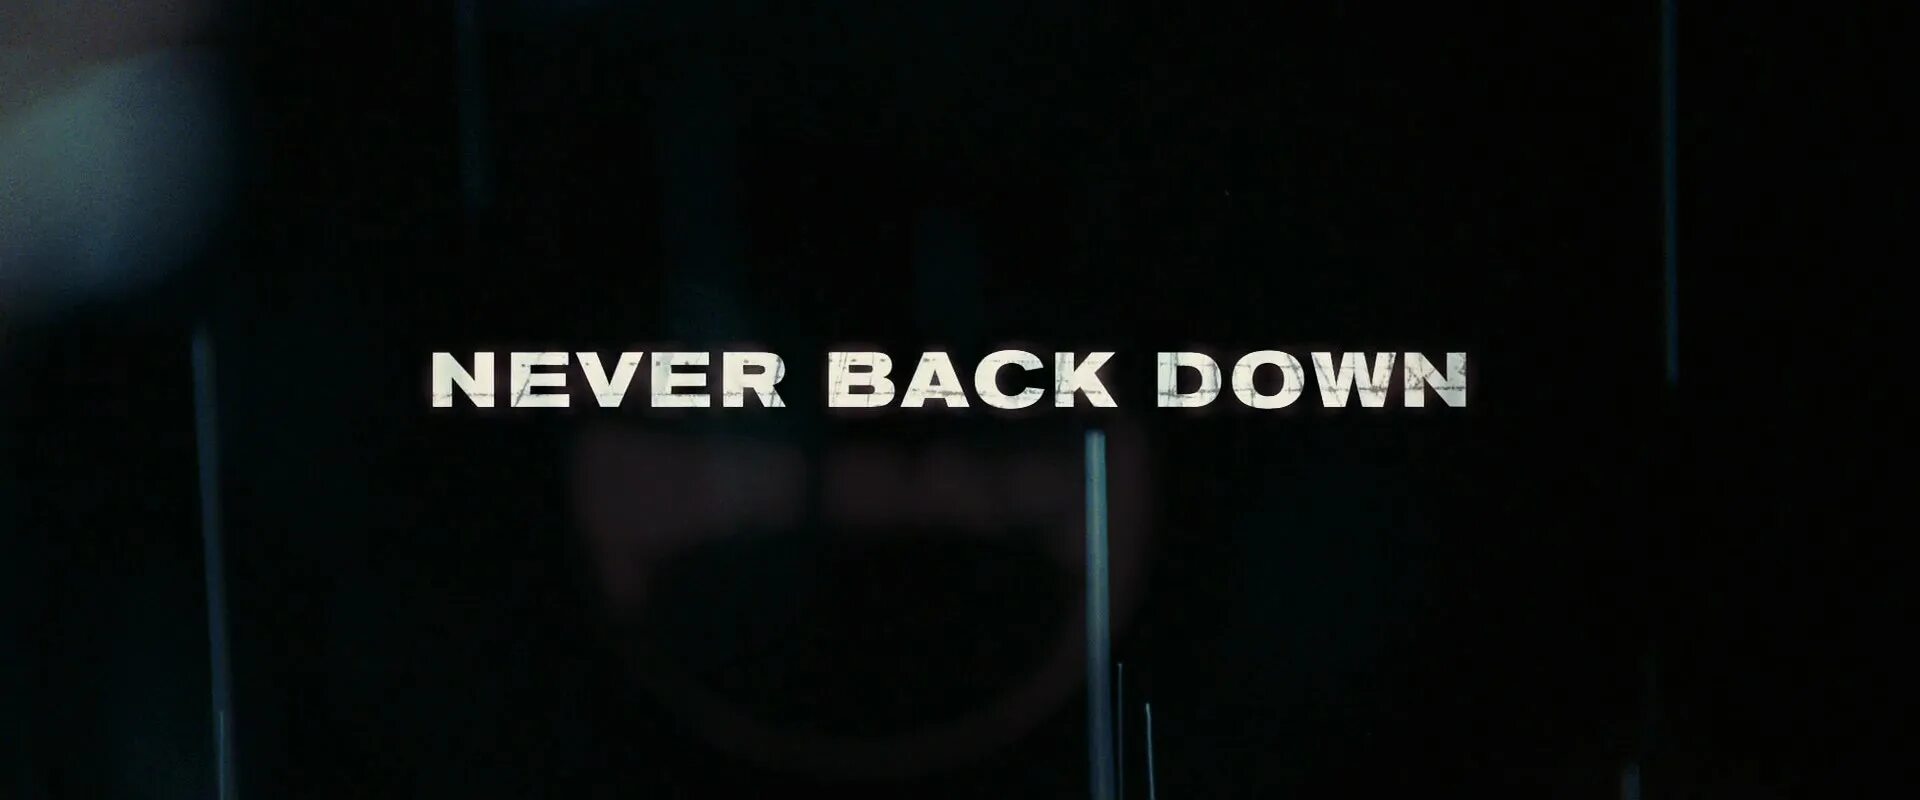 Back down back out. Never back down. Never back down Wallpaper. Never back down надпись. Don't back down.